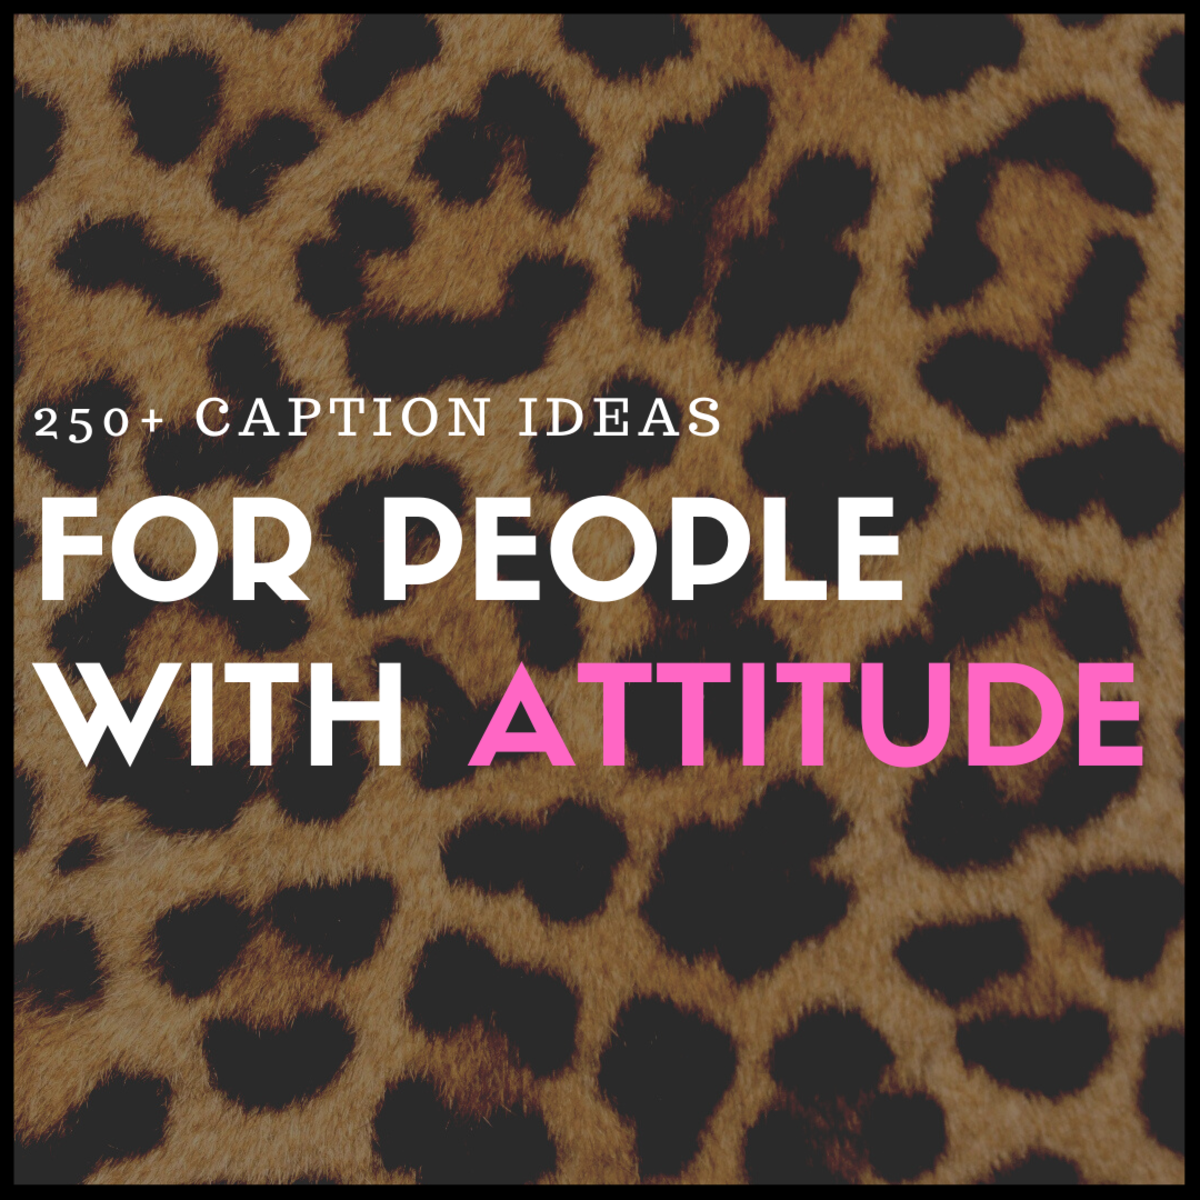 250+ Attitude Quotes and Caption Ideas